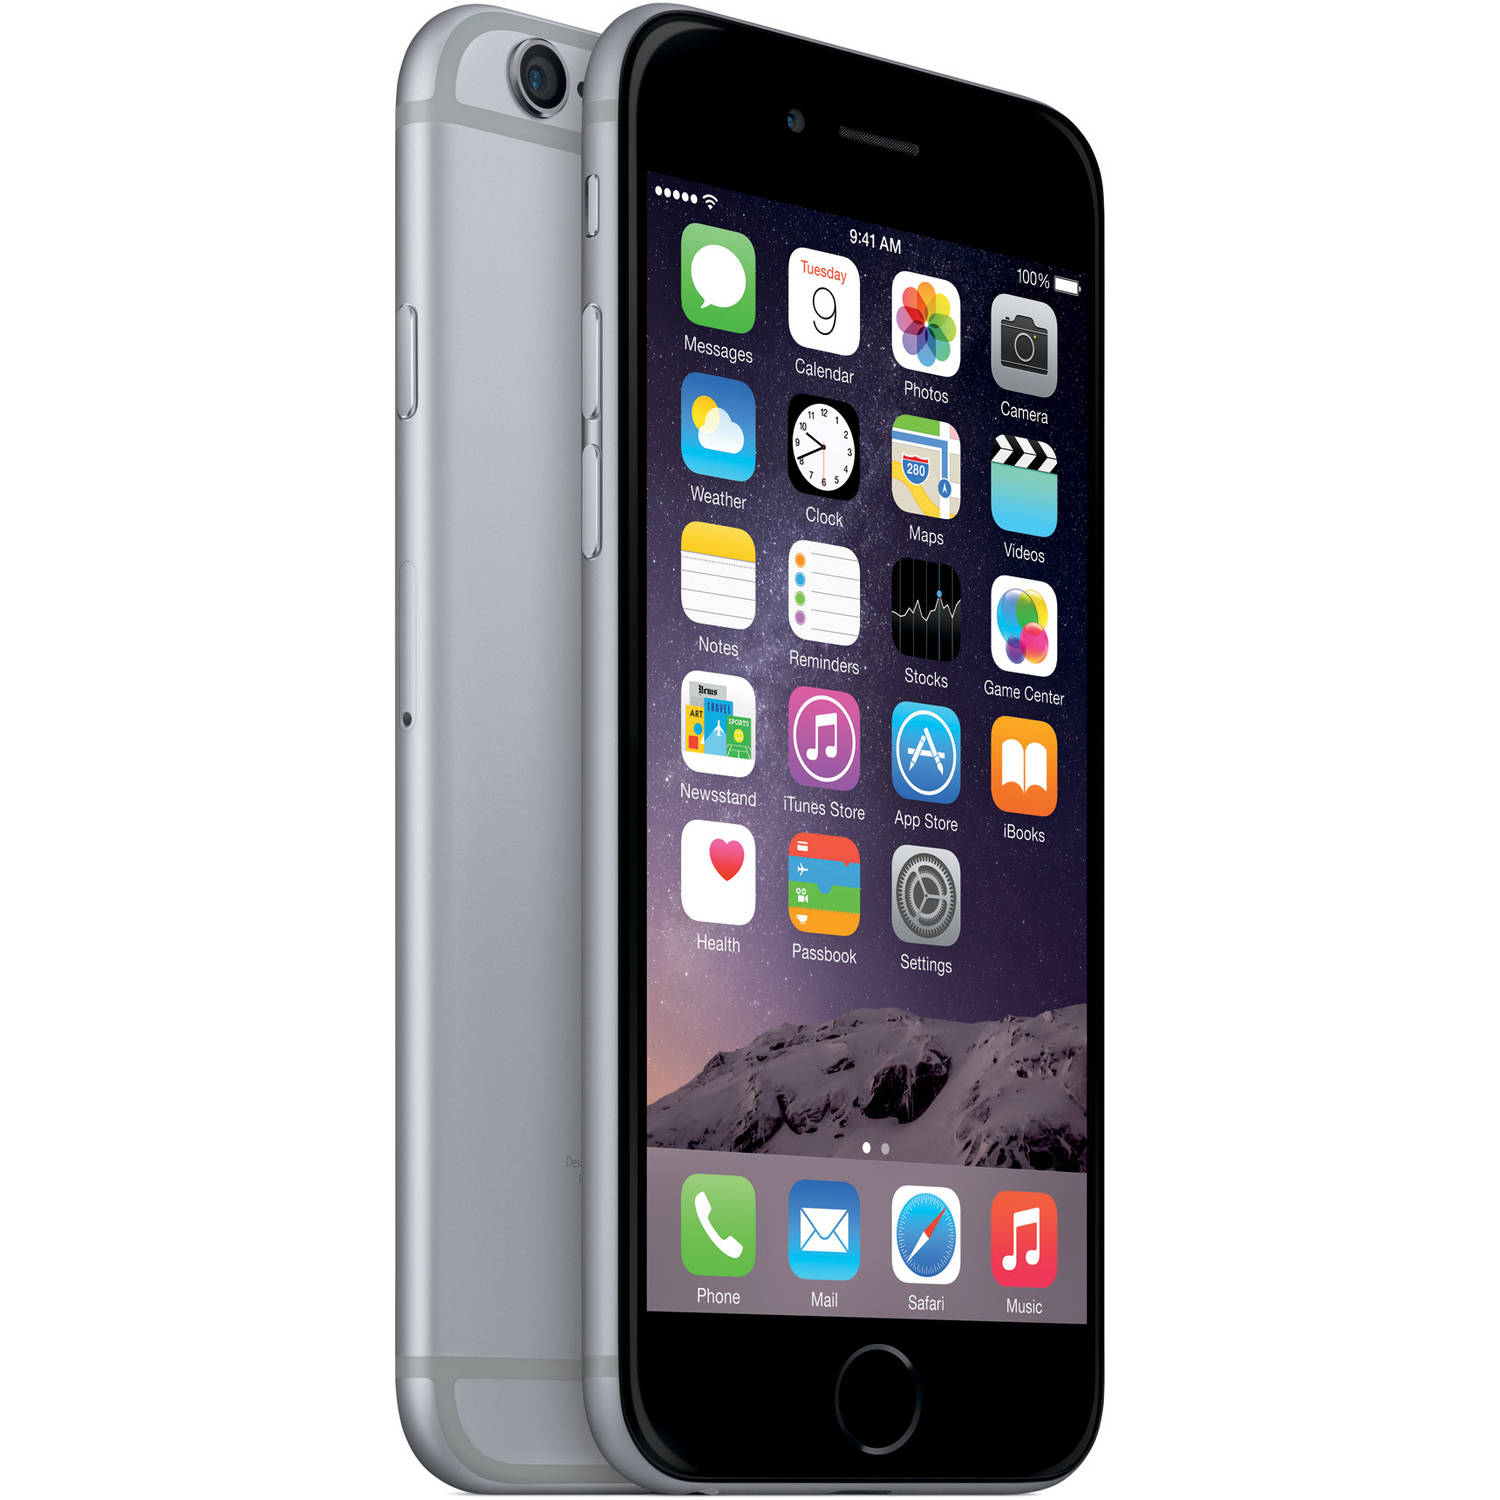 iPhone 6 Price in Kenya